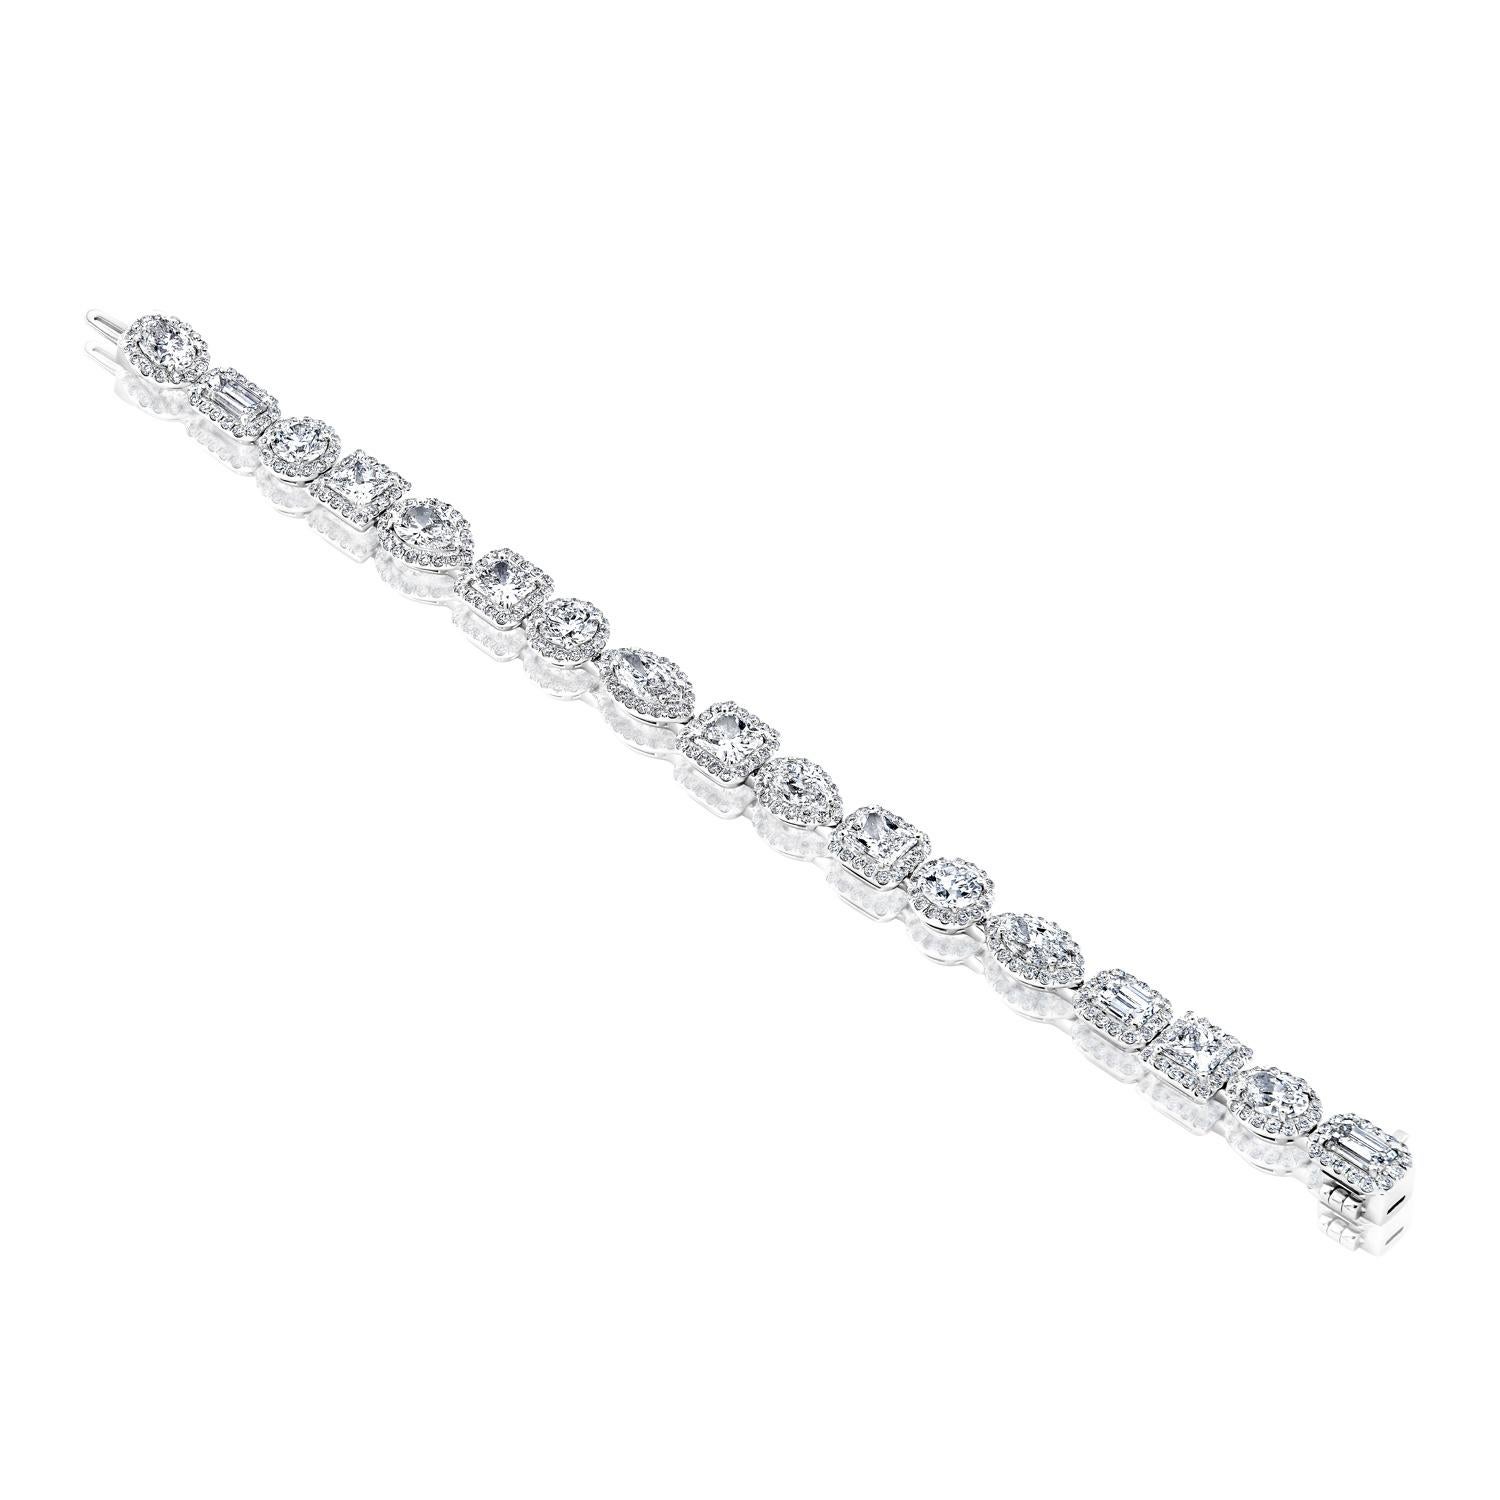 Mixed Cut 21 Carat Combine Mix Shape Diamond Bracelet Certified For Sale